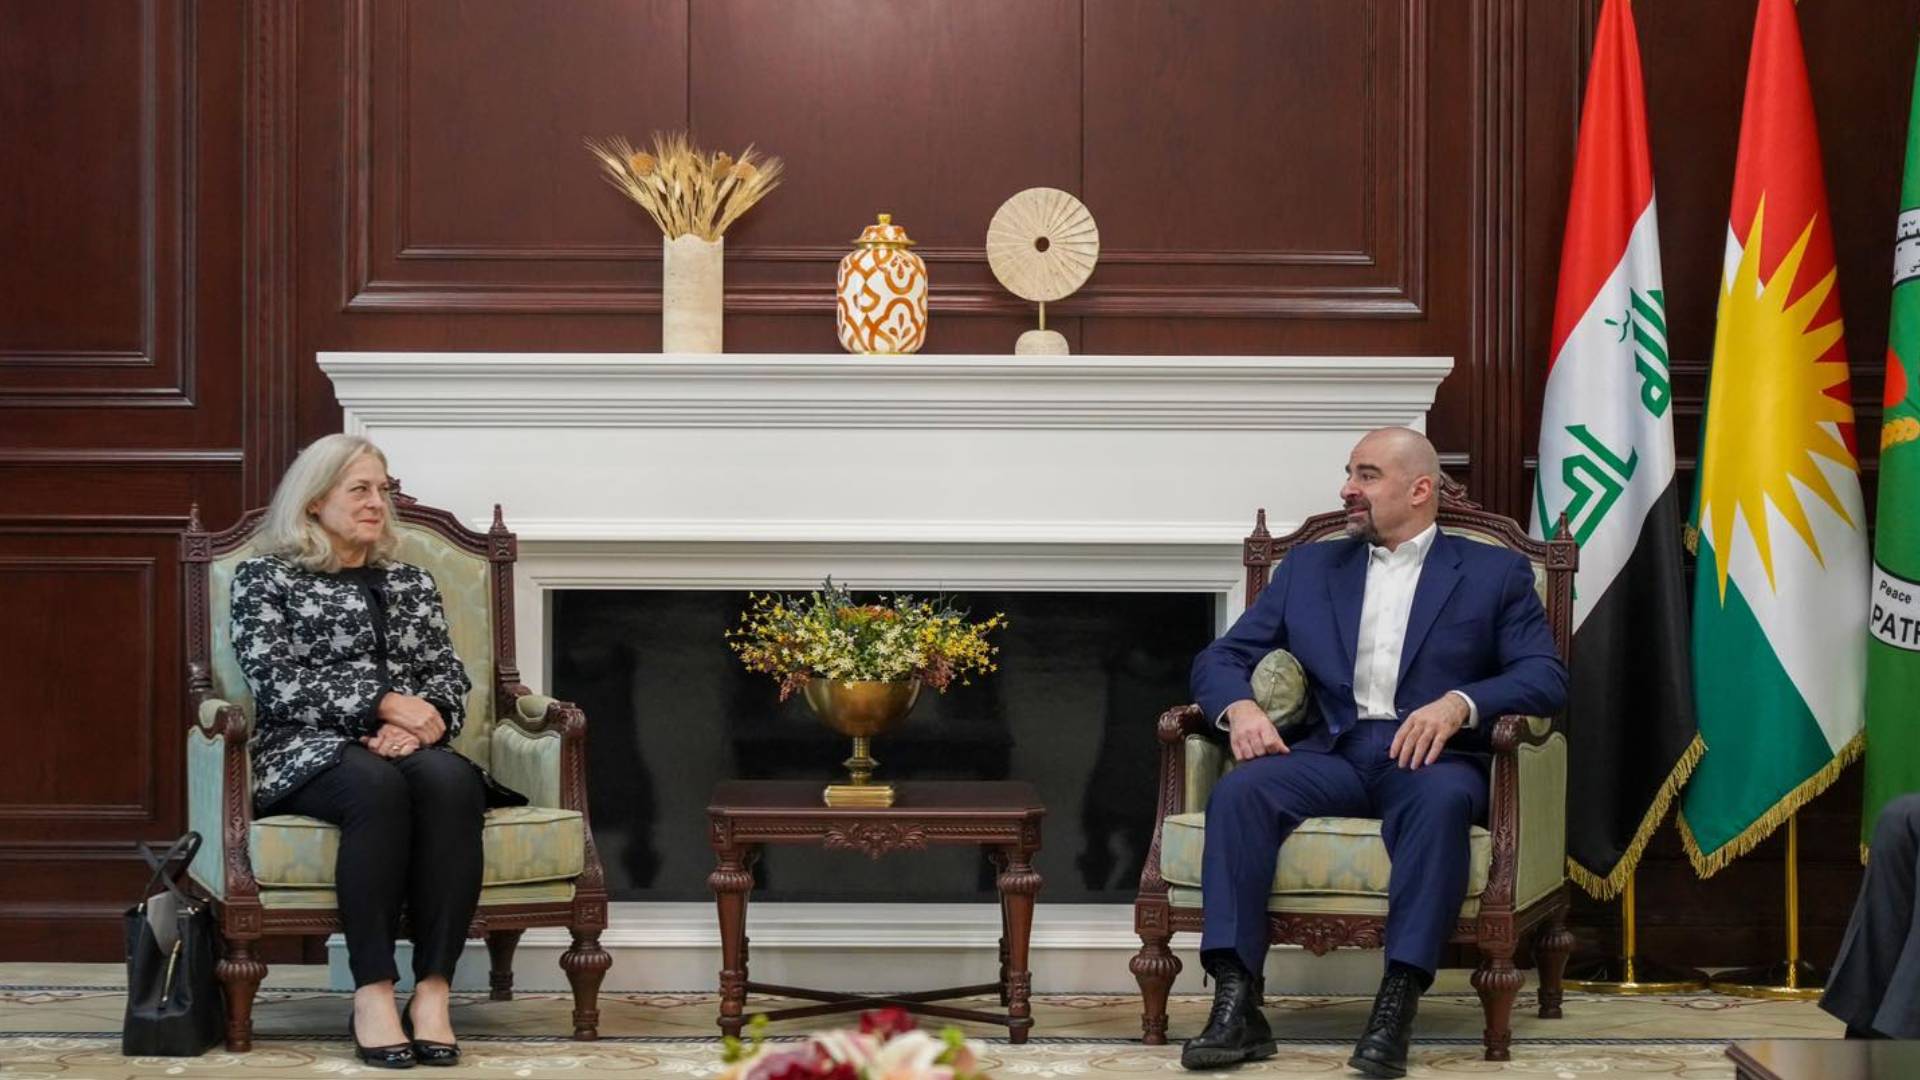  President Bafel Jalal Talabani meets U.S. Ambassador